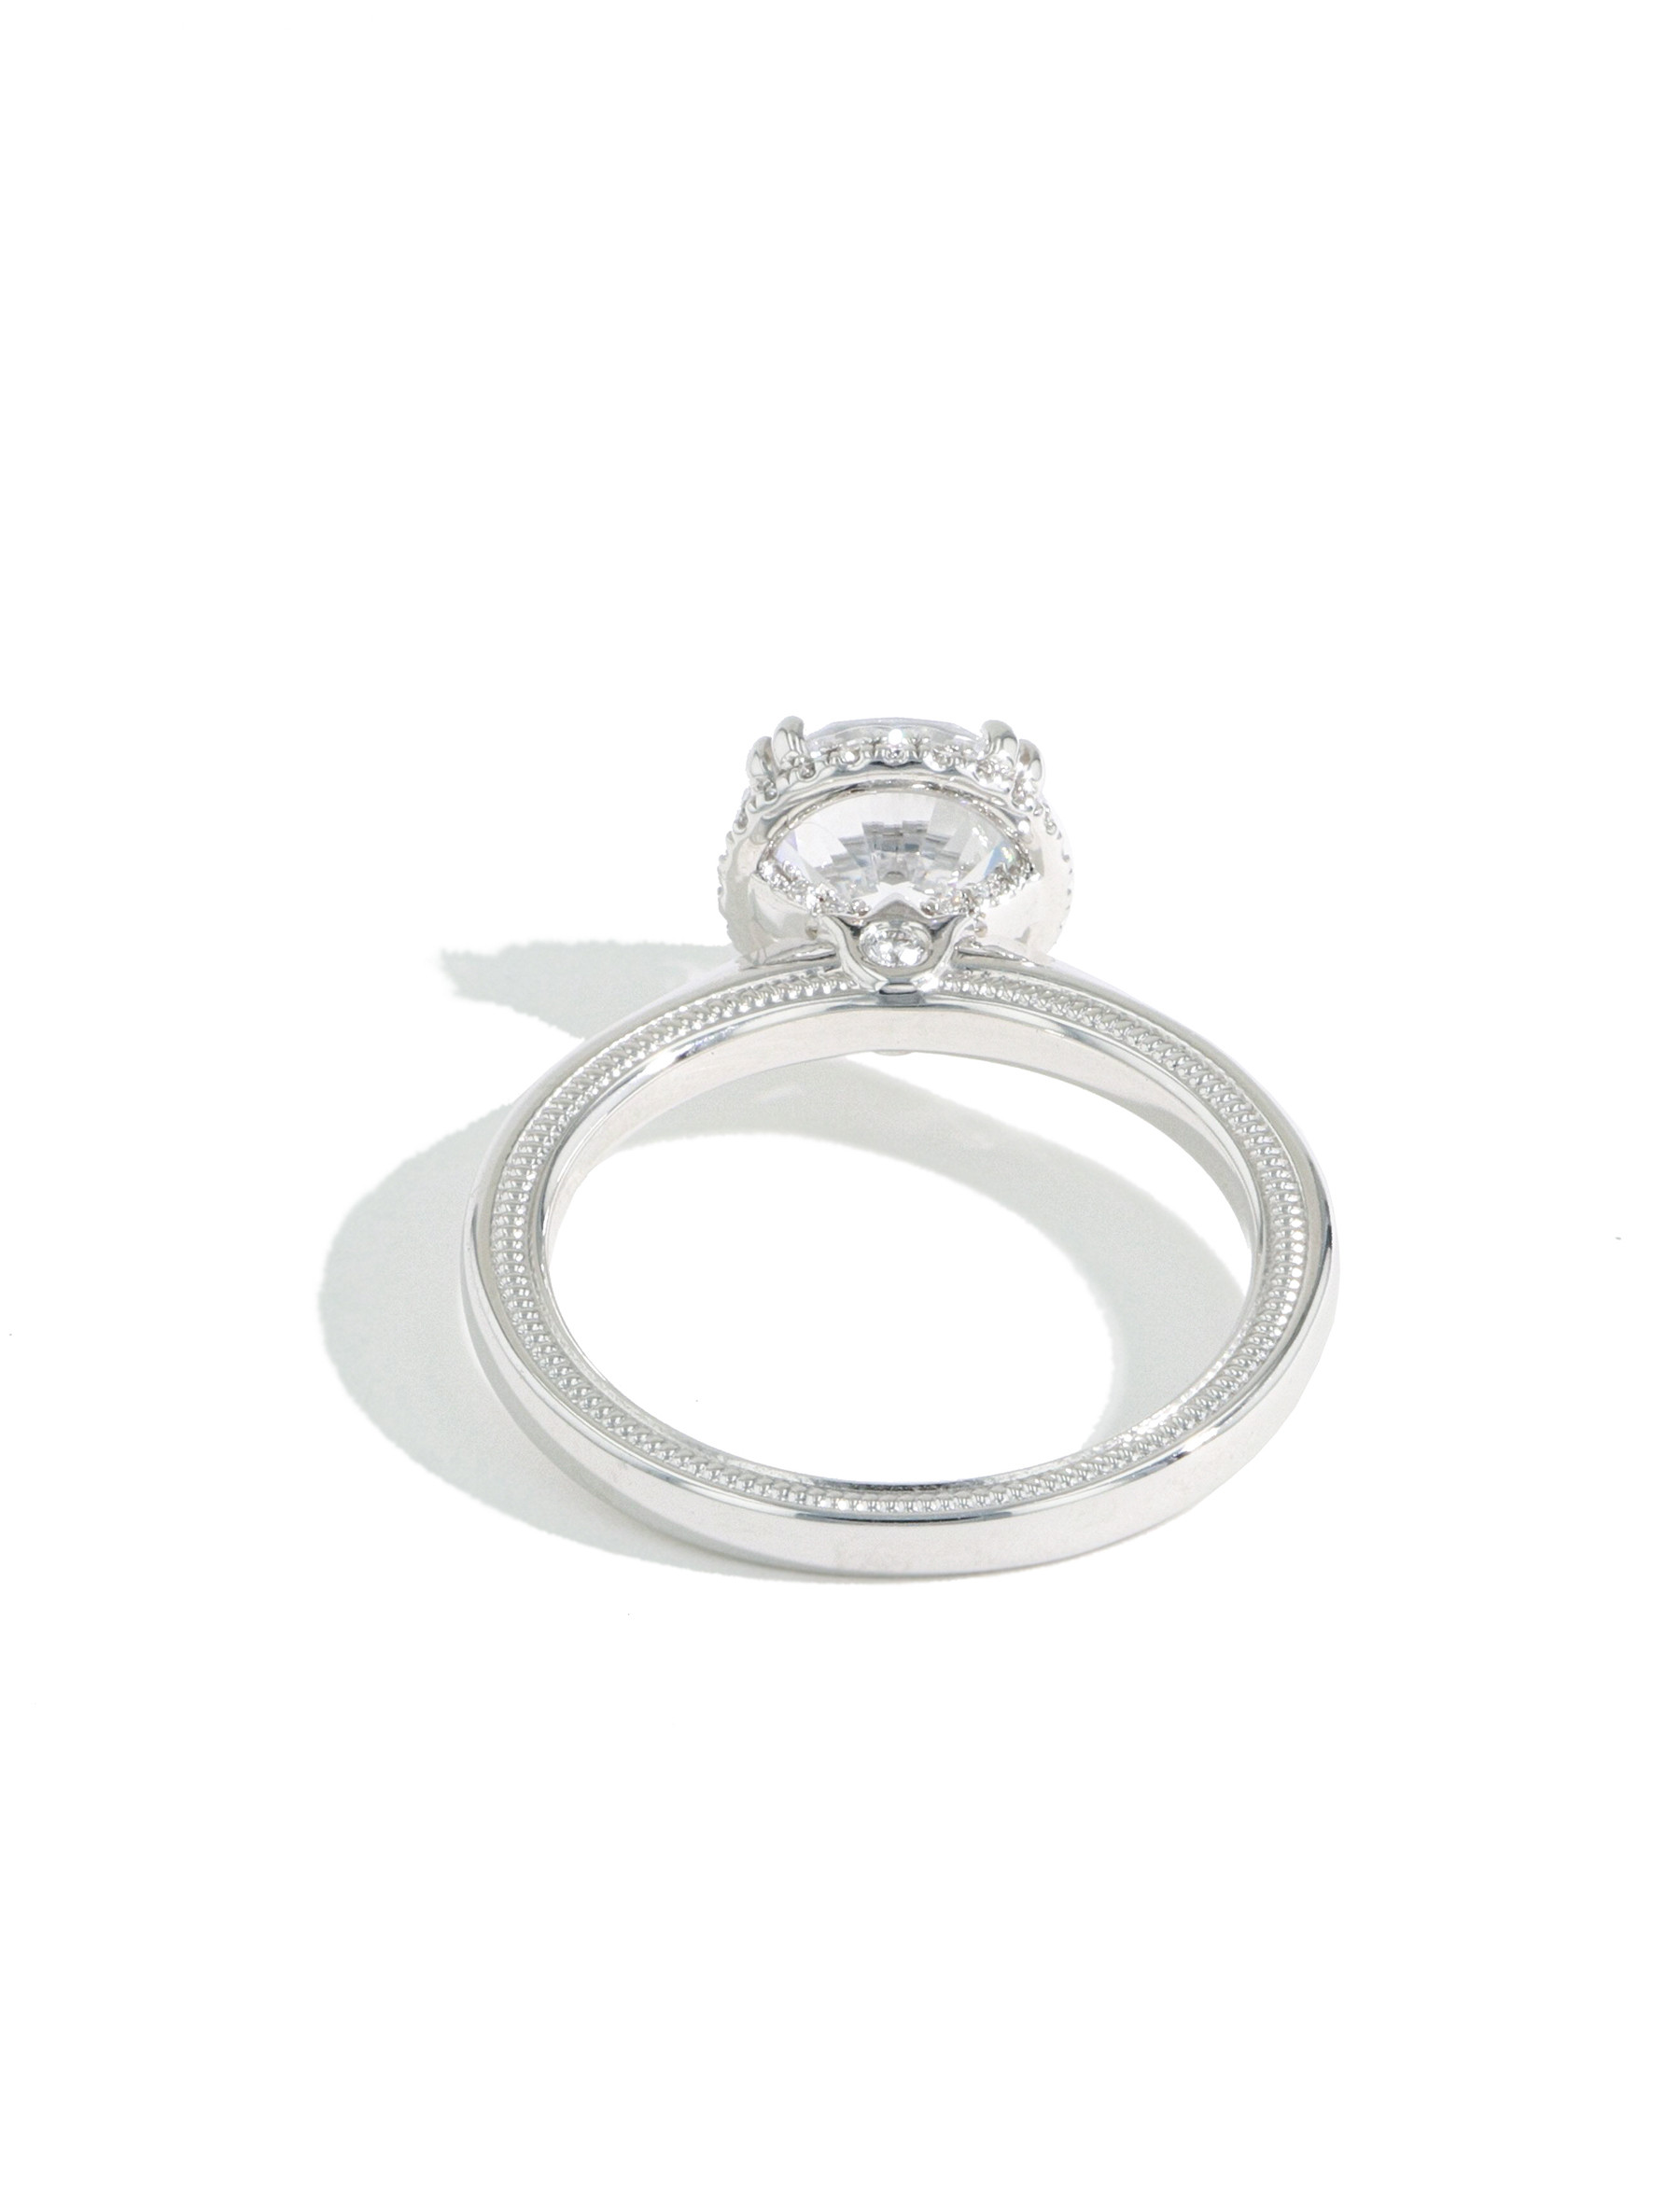 Verragio Tradition Round Diamond Hidden Halo Engagement Ring Setting back view